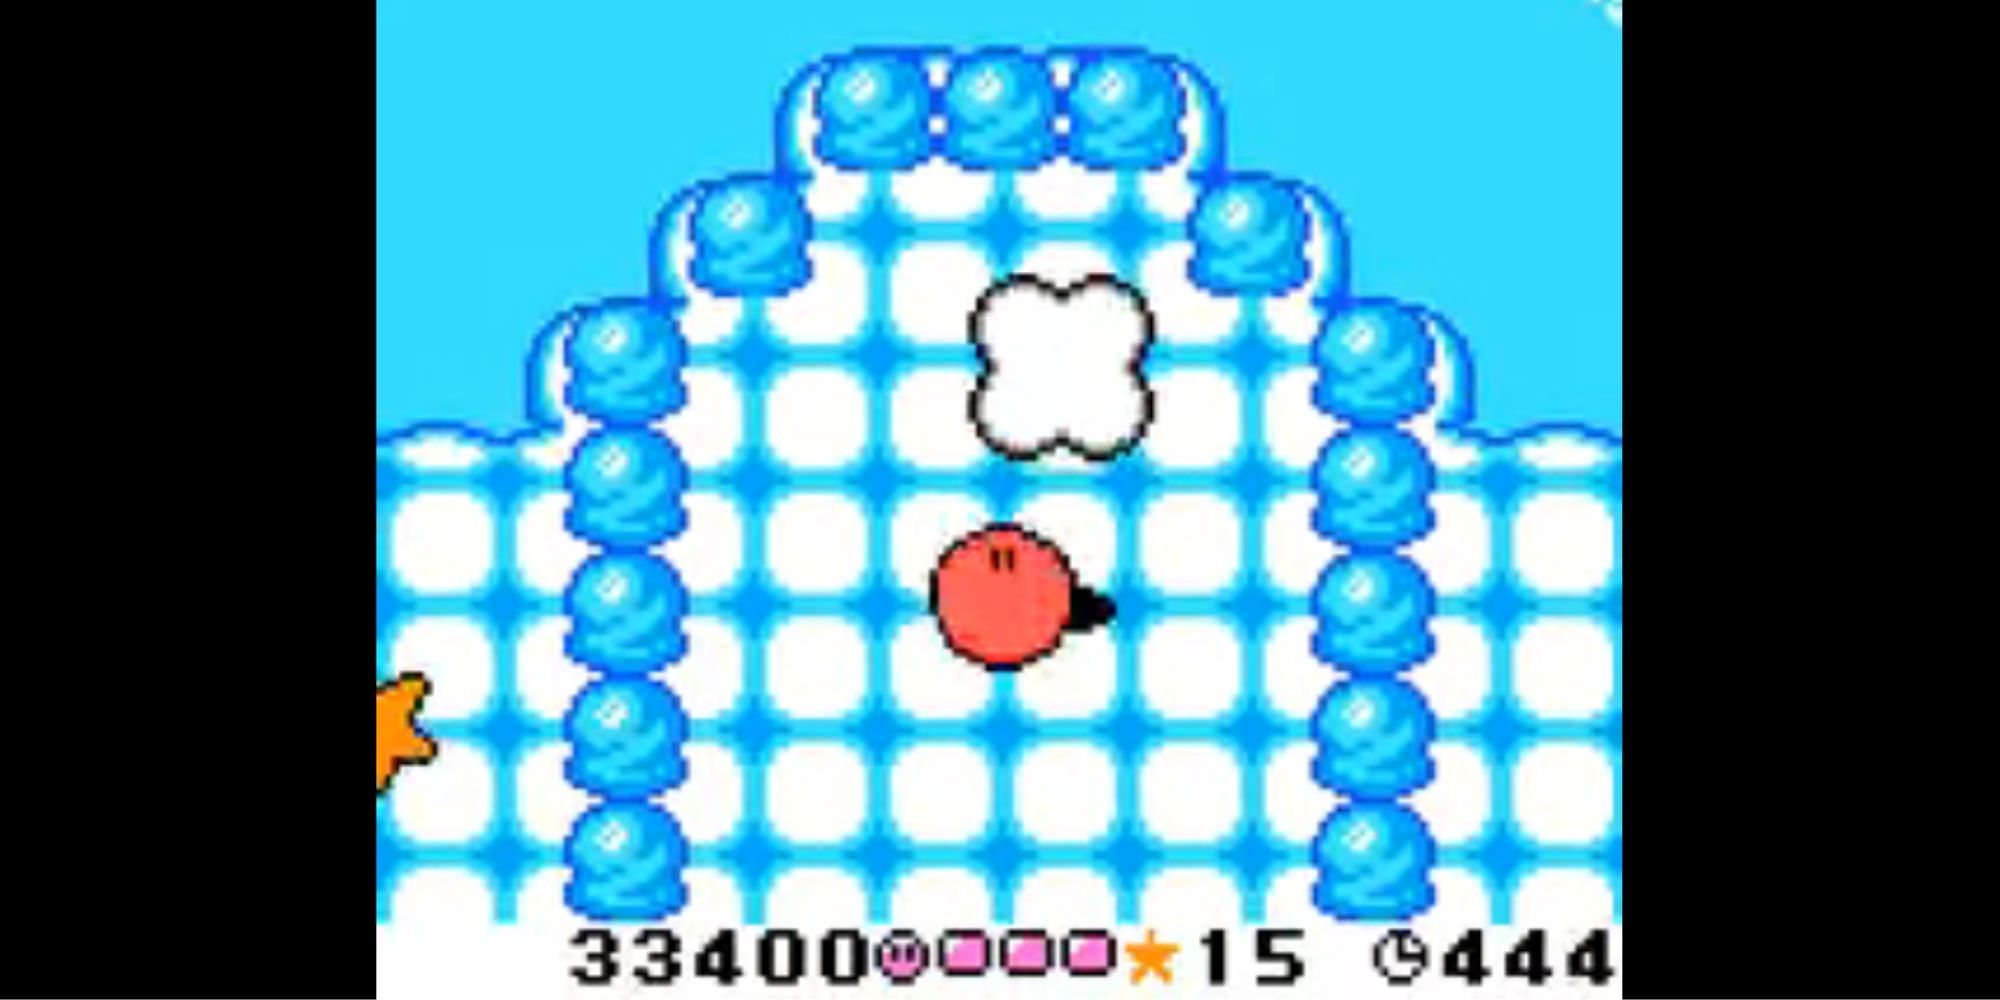 Kirby rolls around on an icy platform